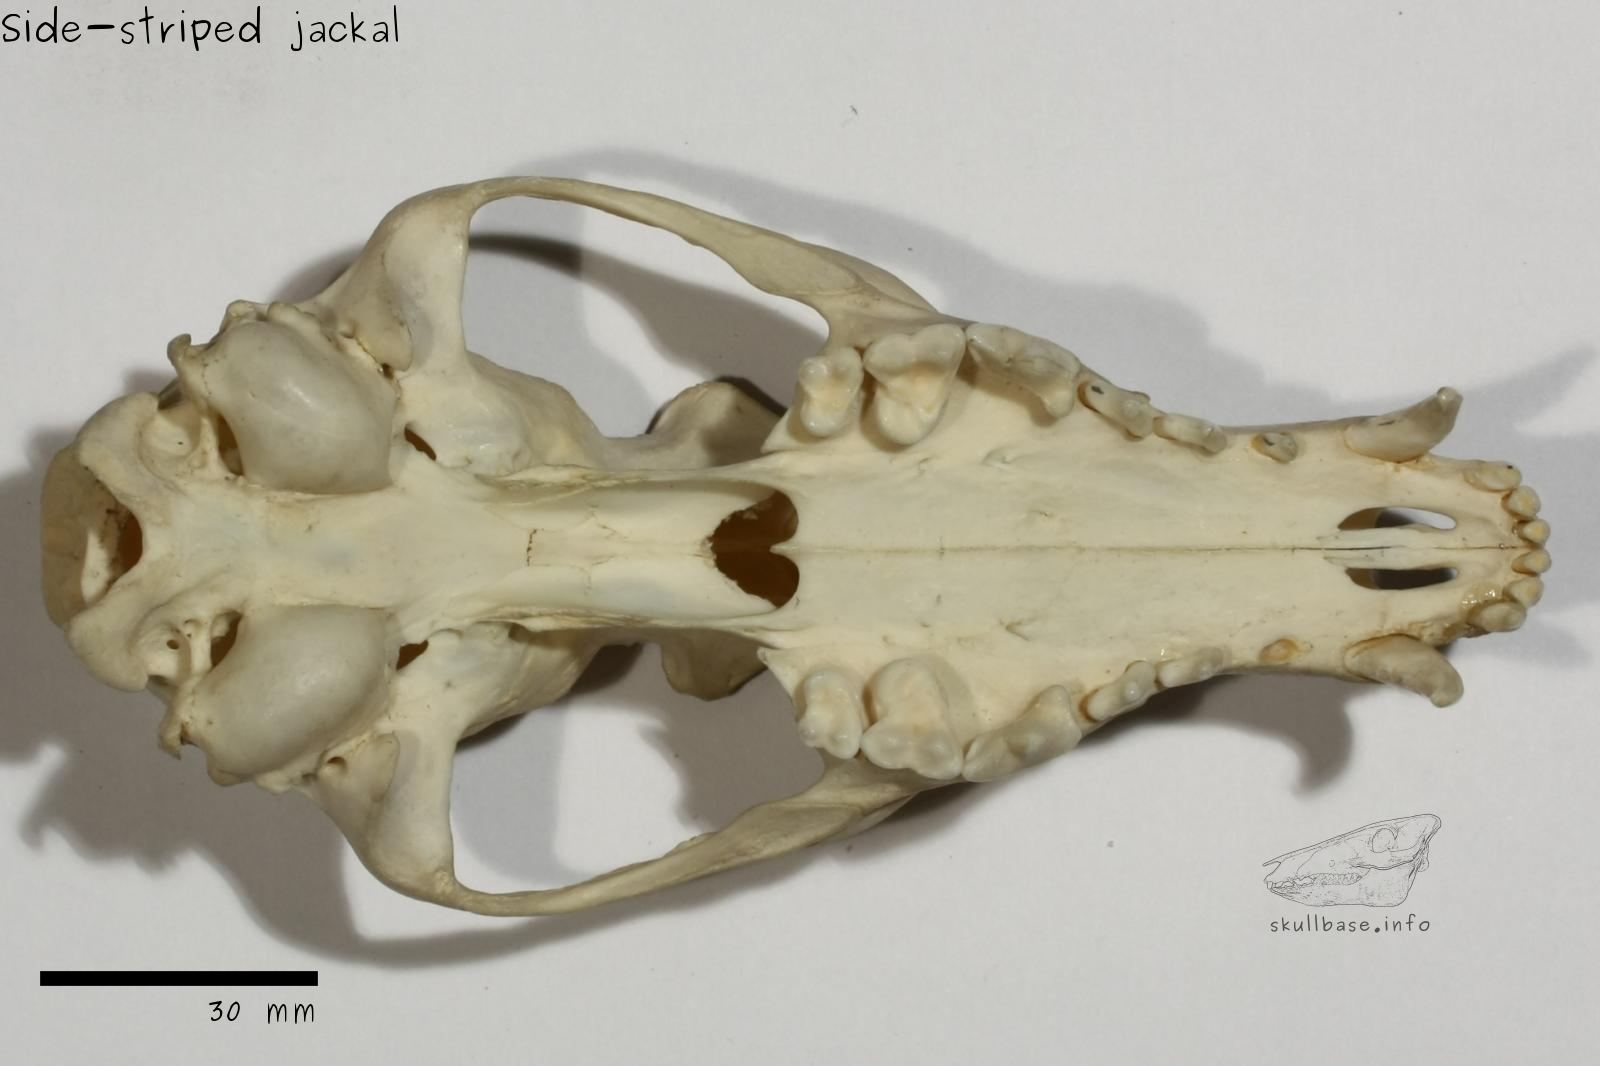 Side-striped jackal (Canis adustus) skull ventral view